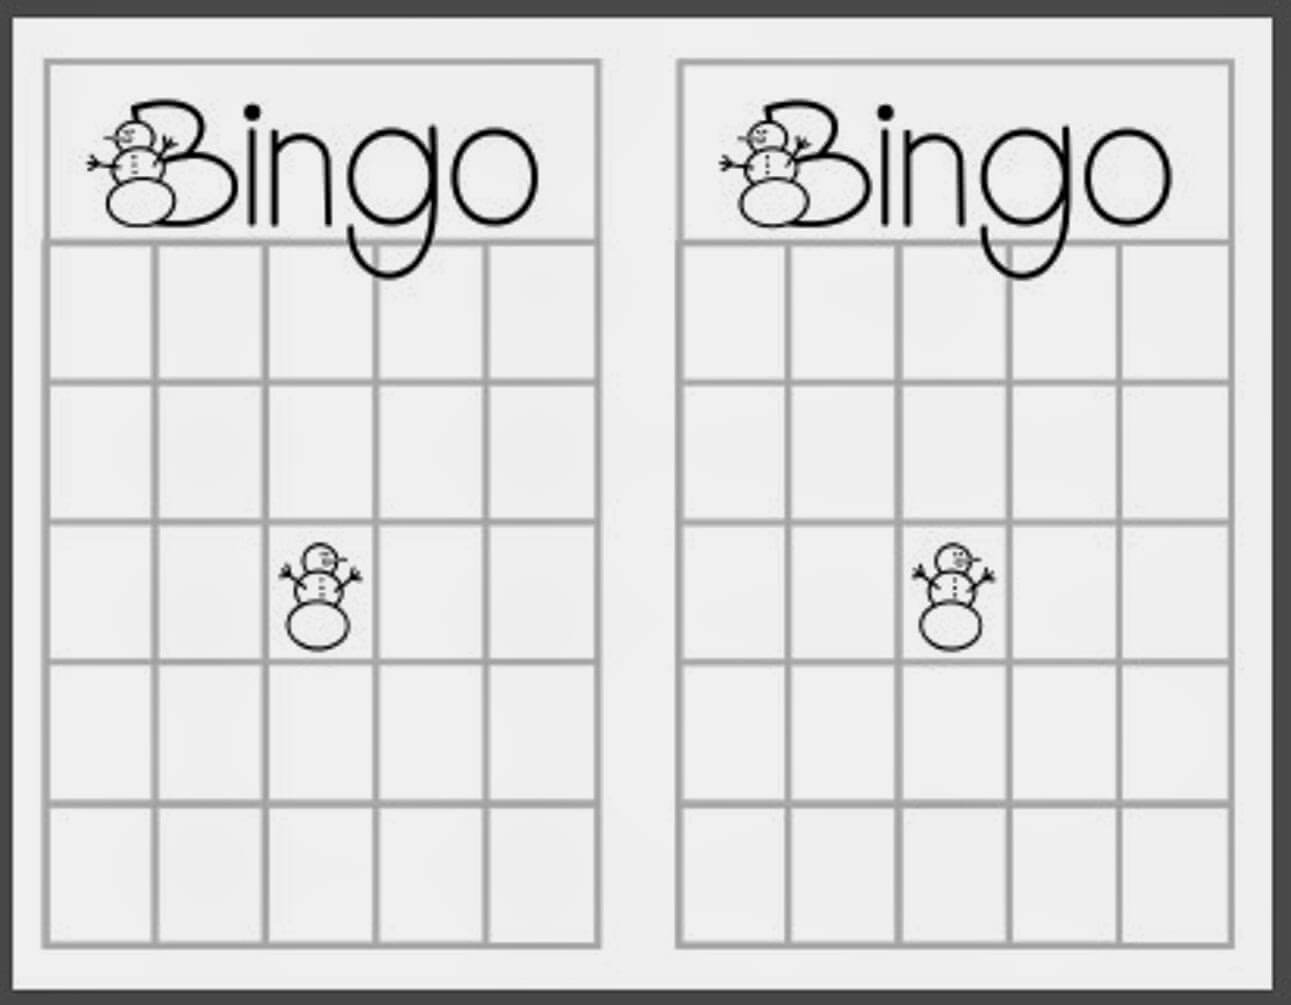 Pictures Blank Bingo Cards Pdf, – Easy Worksheet Ideas For Blank Bingo Template Pdf